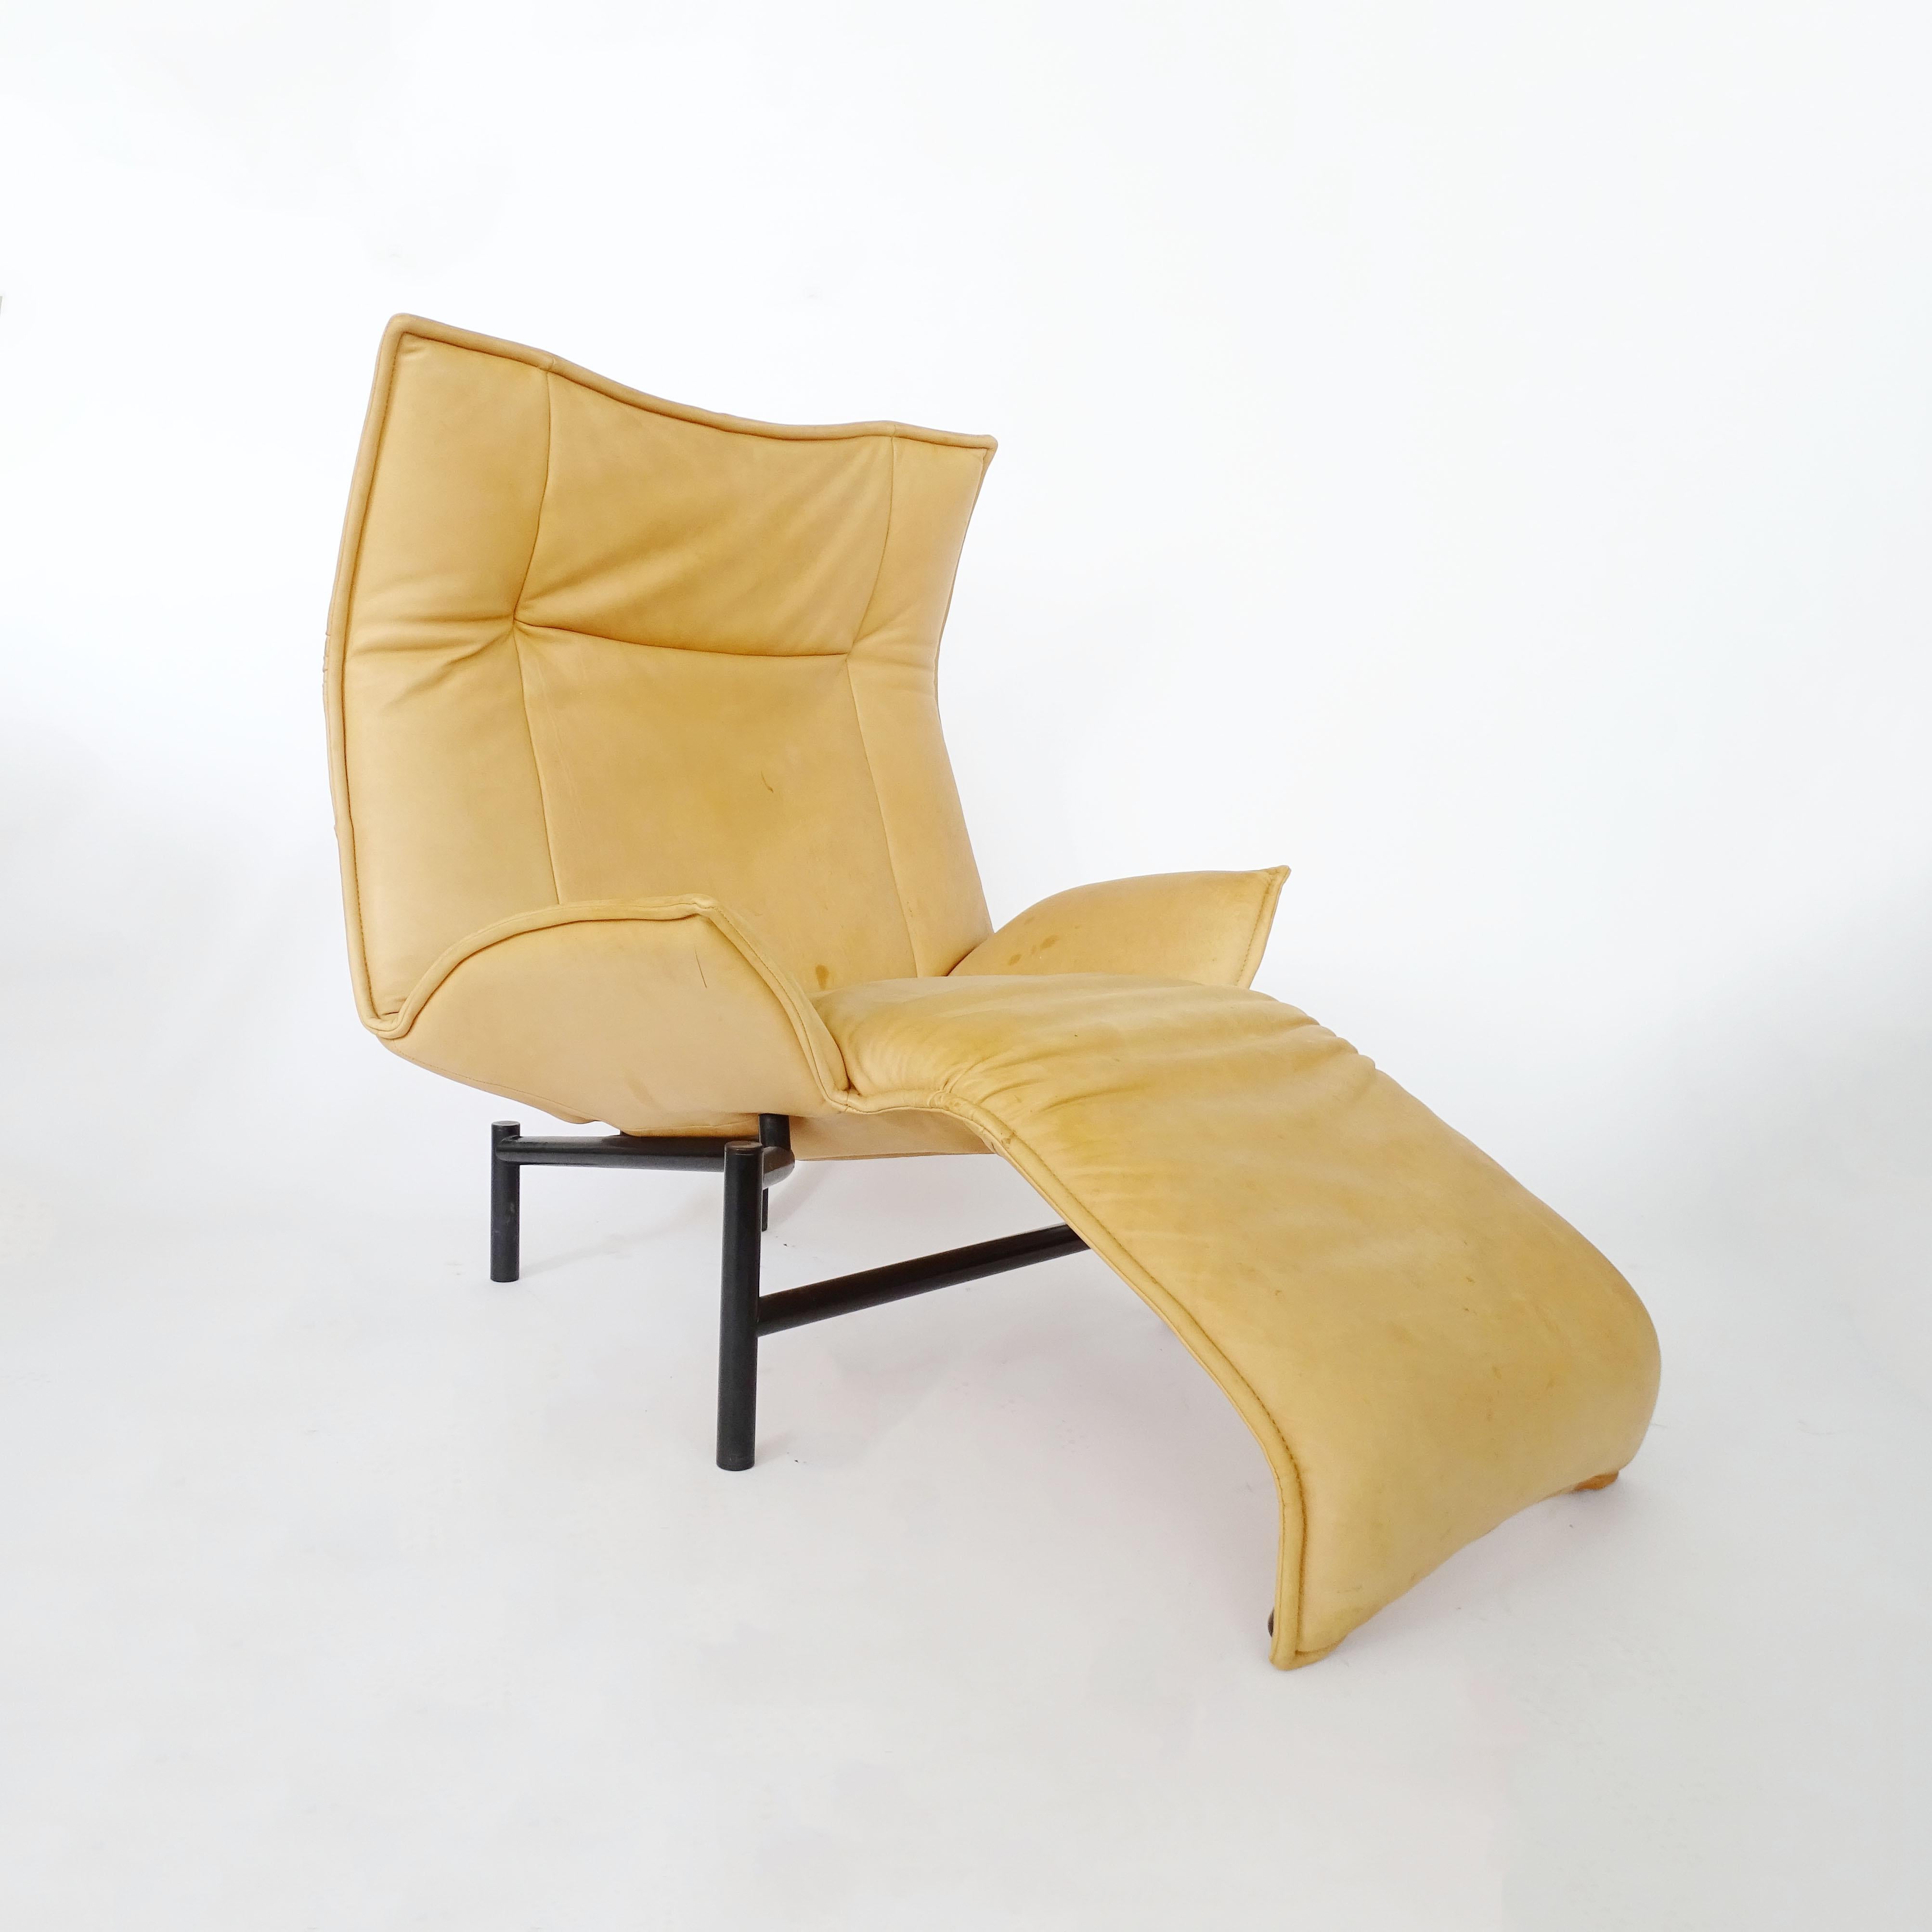 Veranda adjustable lounge chair by Vico Magistretti for Cassina 1980.